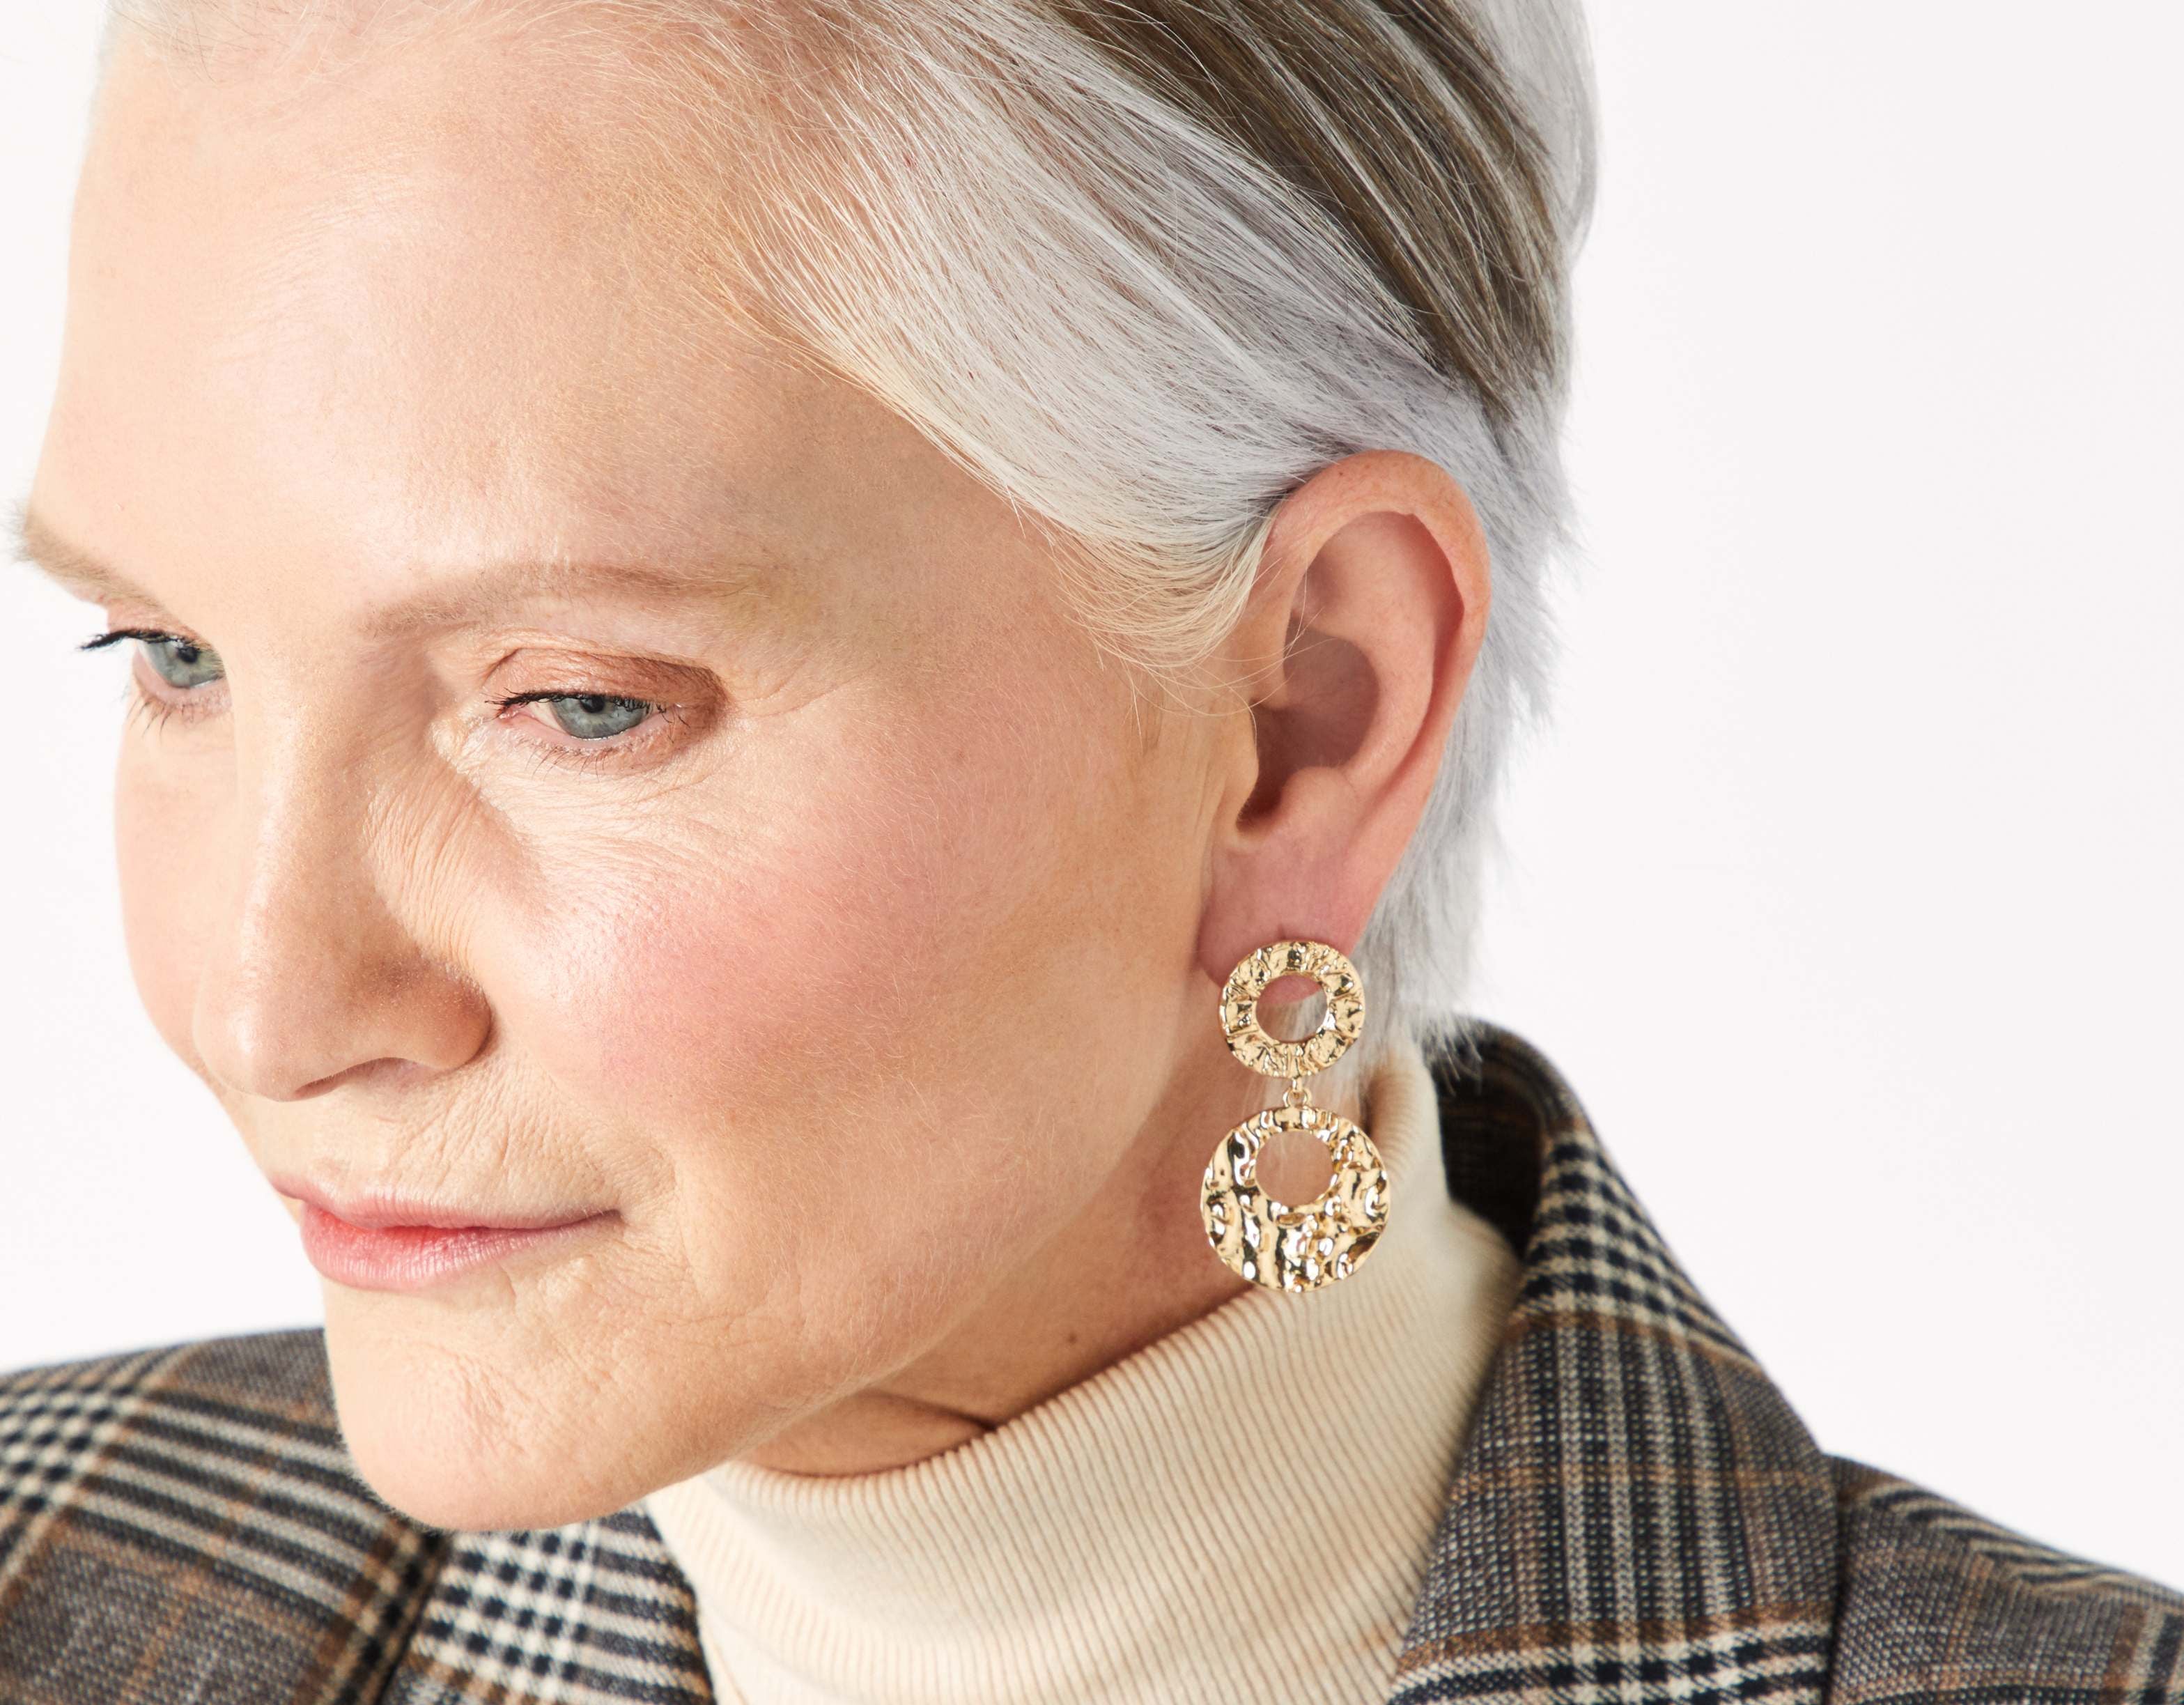 Accessorize London Women's Textured Circle Drop Earrings